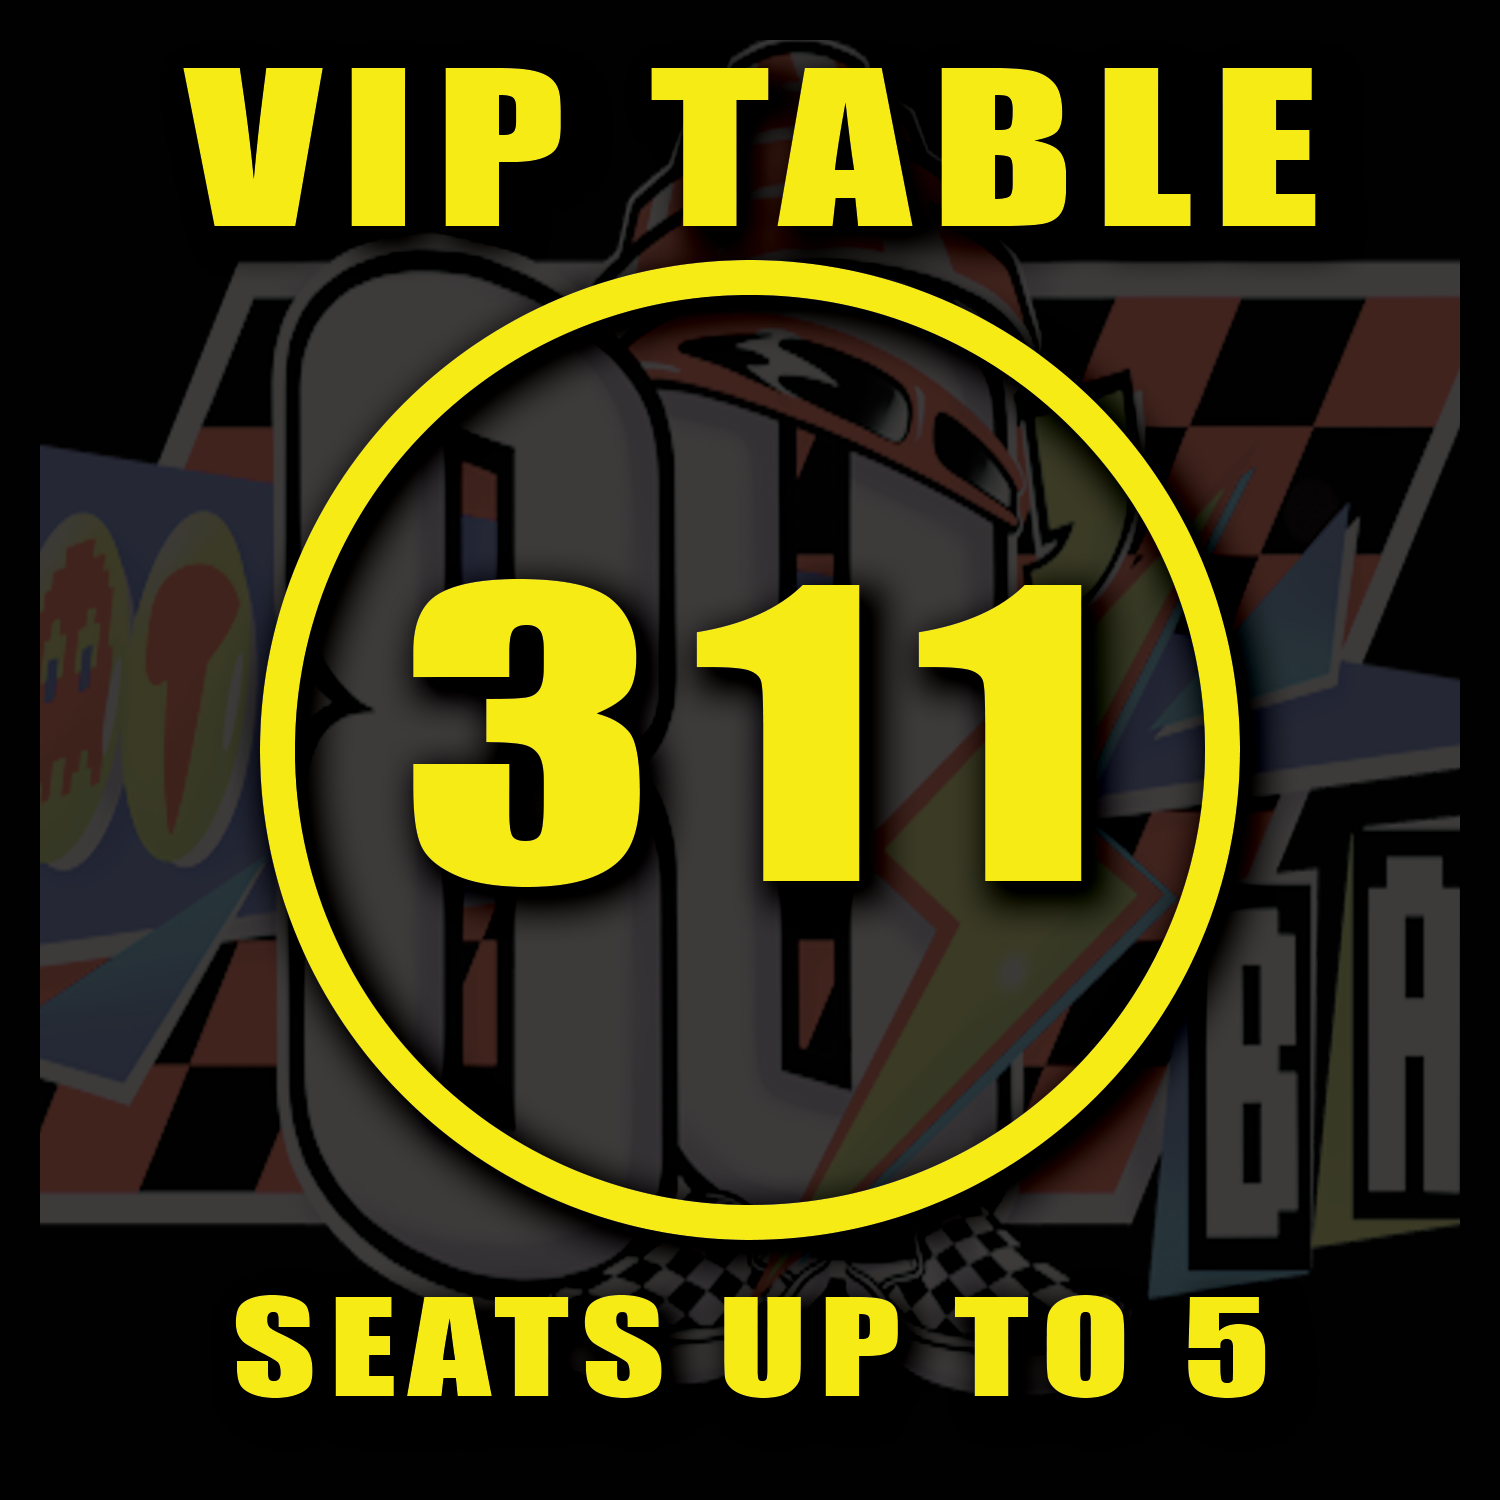 VIP TABLE 311